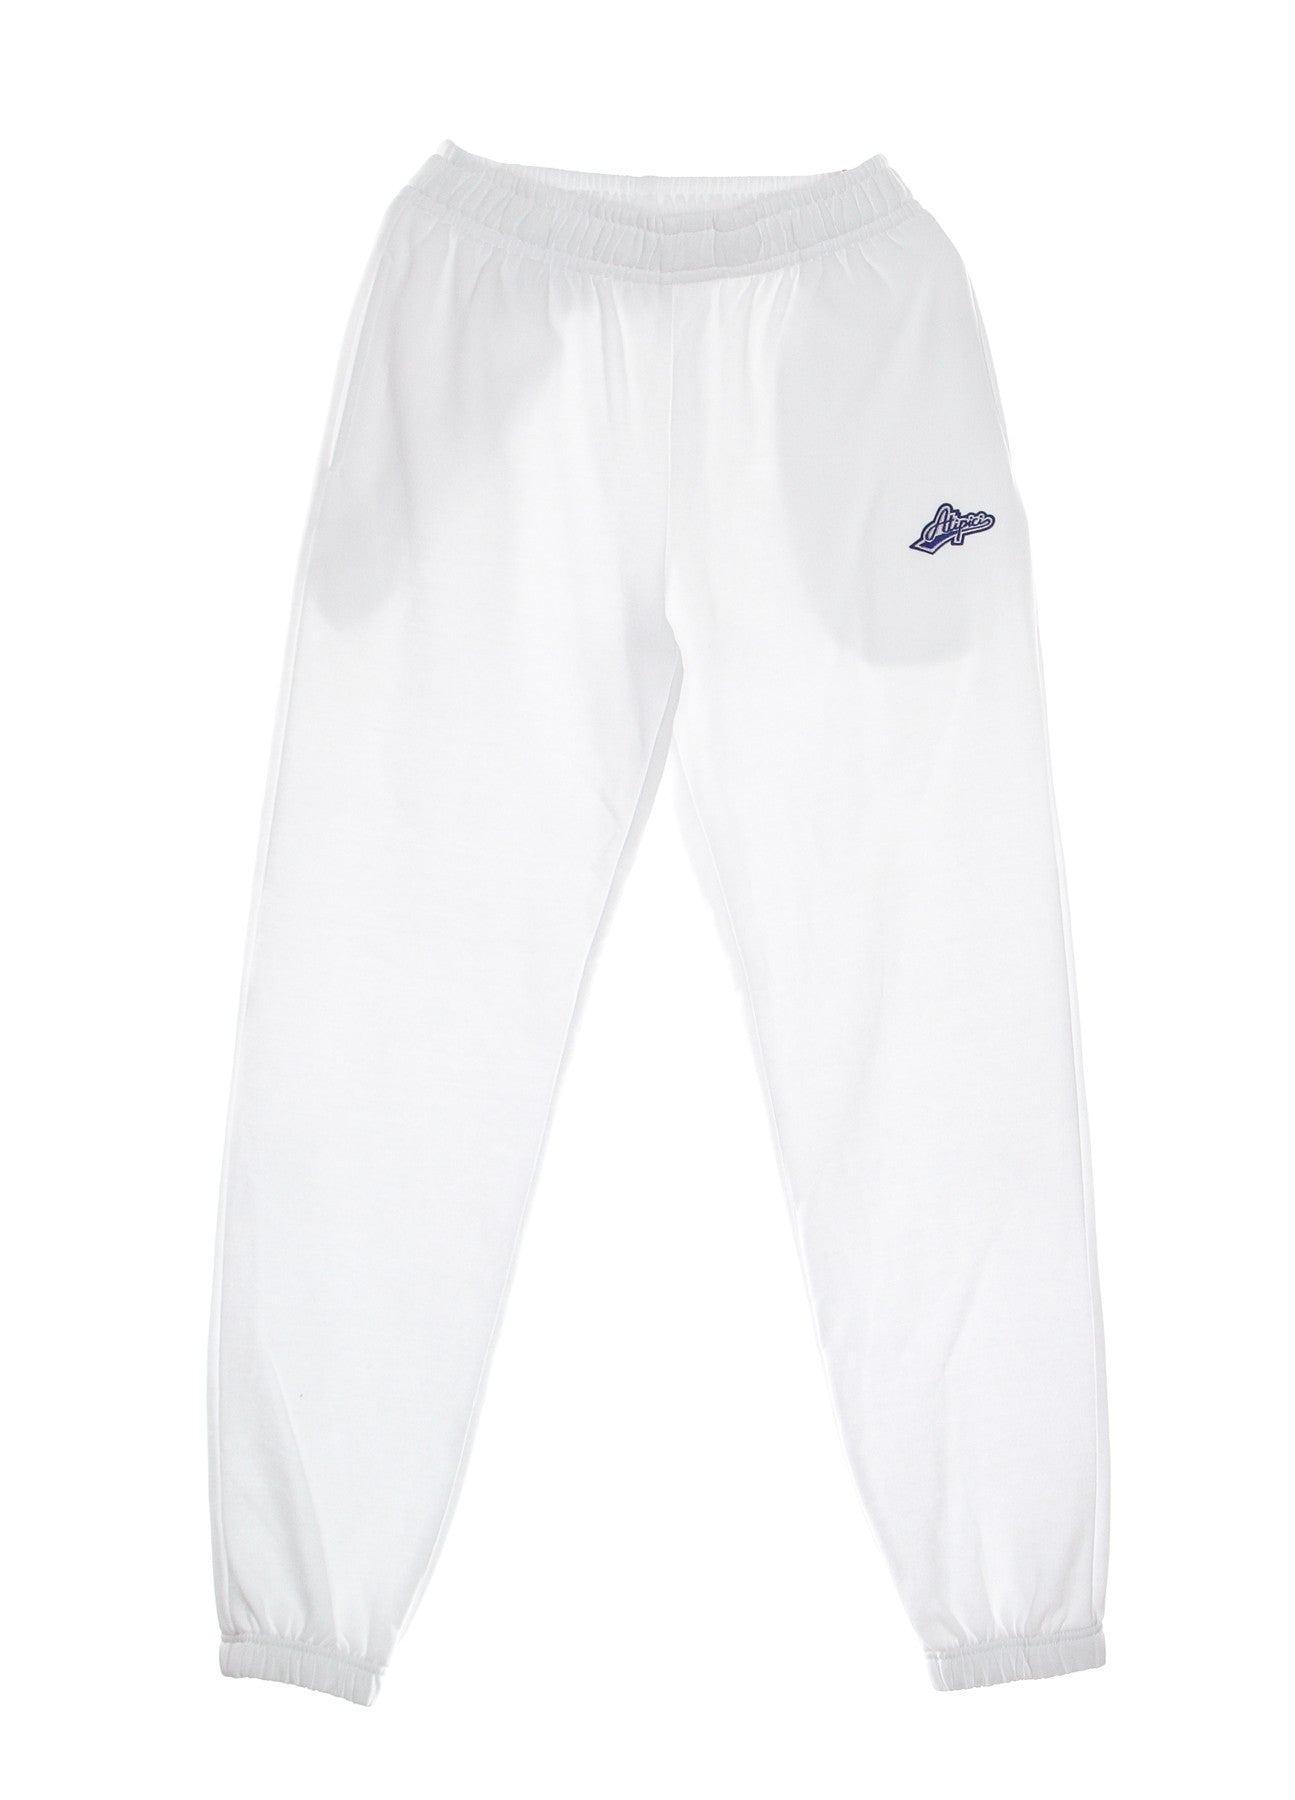 Pantalone Tuta Felpato Uomo Starter Pack Sweatpant White ATIPICI002SP-SWEATPANT